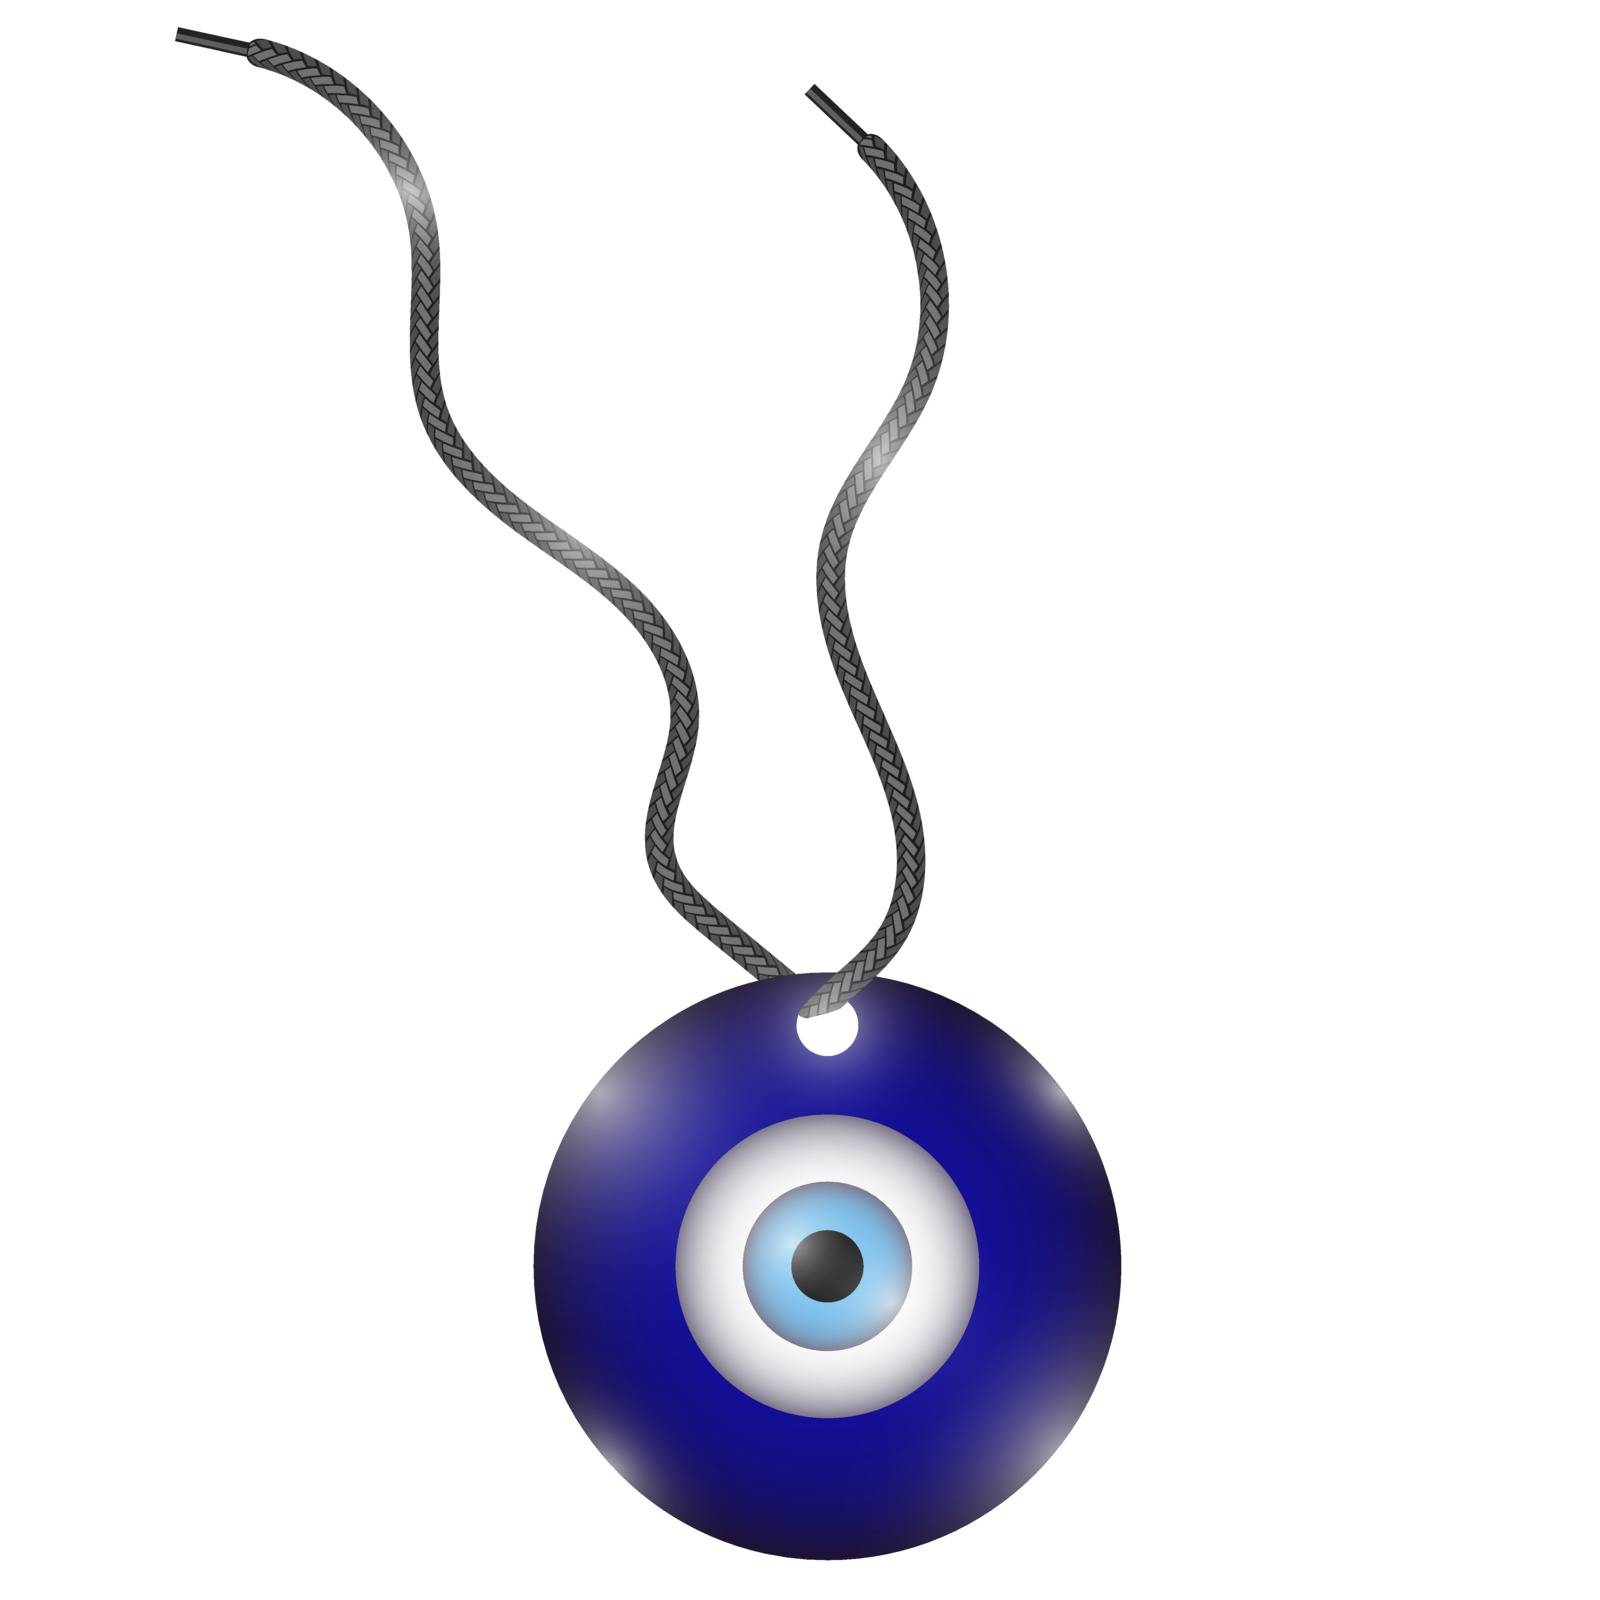 Glass Evil Eye Symbol. Turkish Traditional Amulet. Nazar Protection Talisman. Blue Magic Souvenir by valeo5